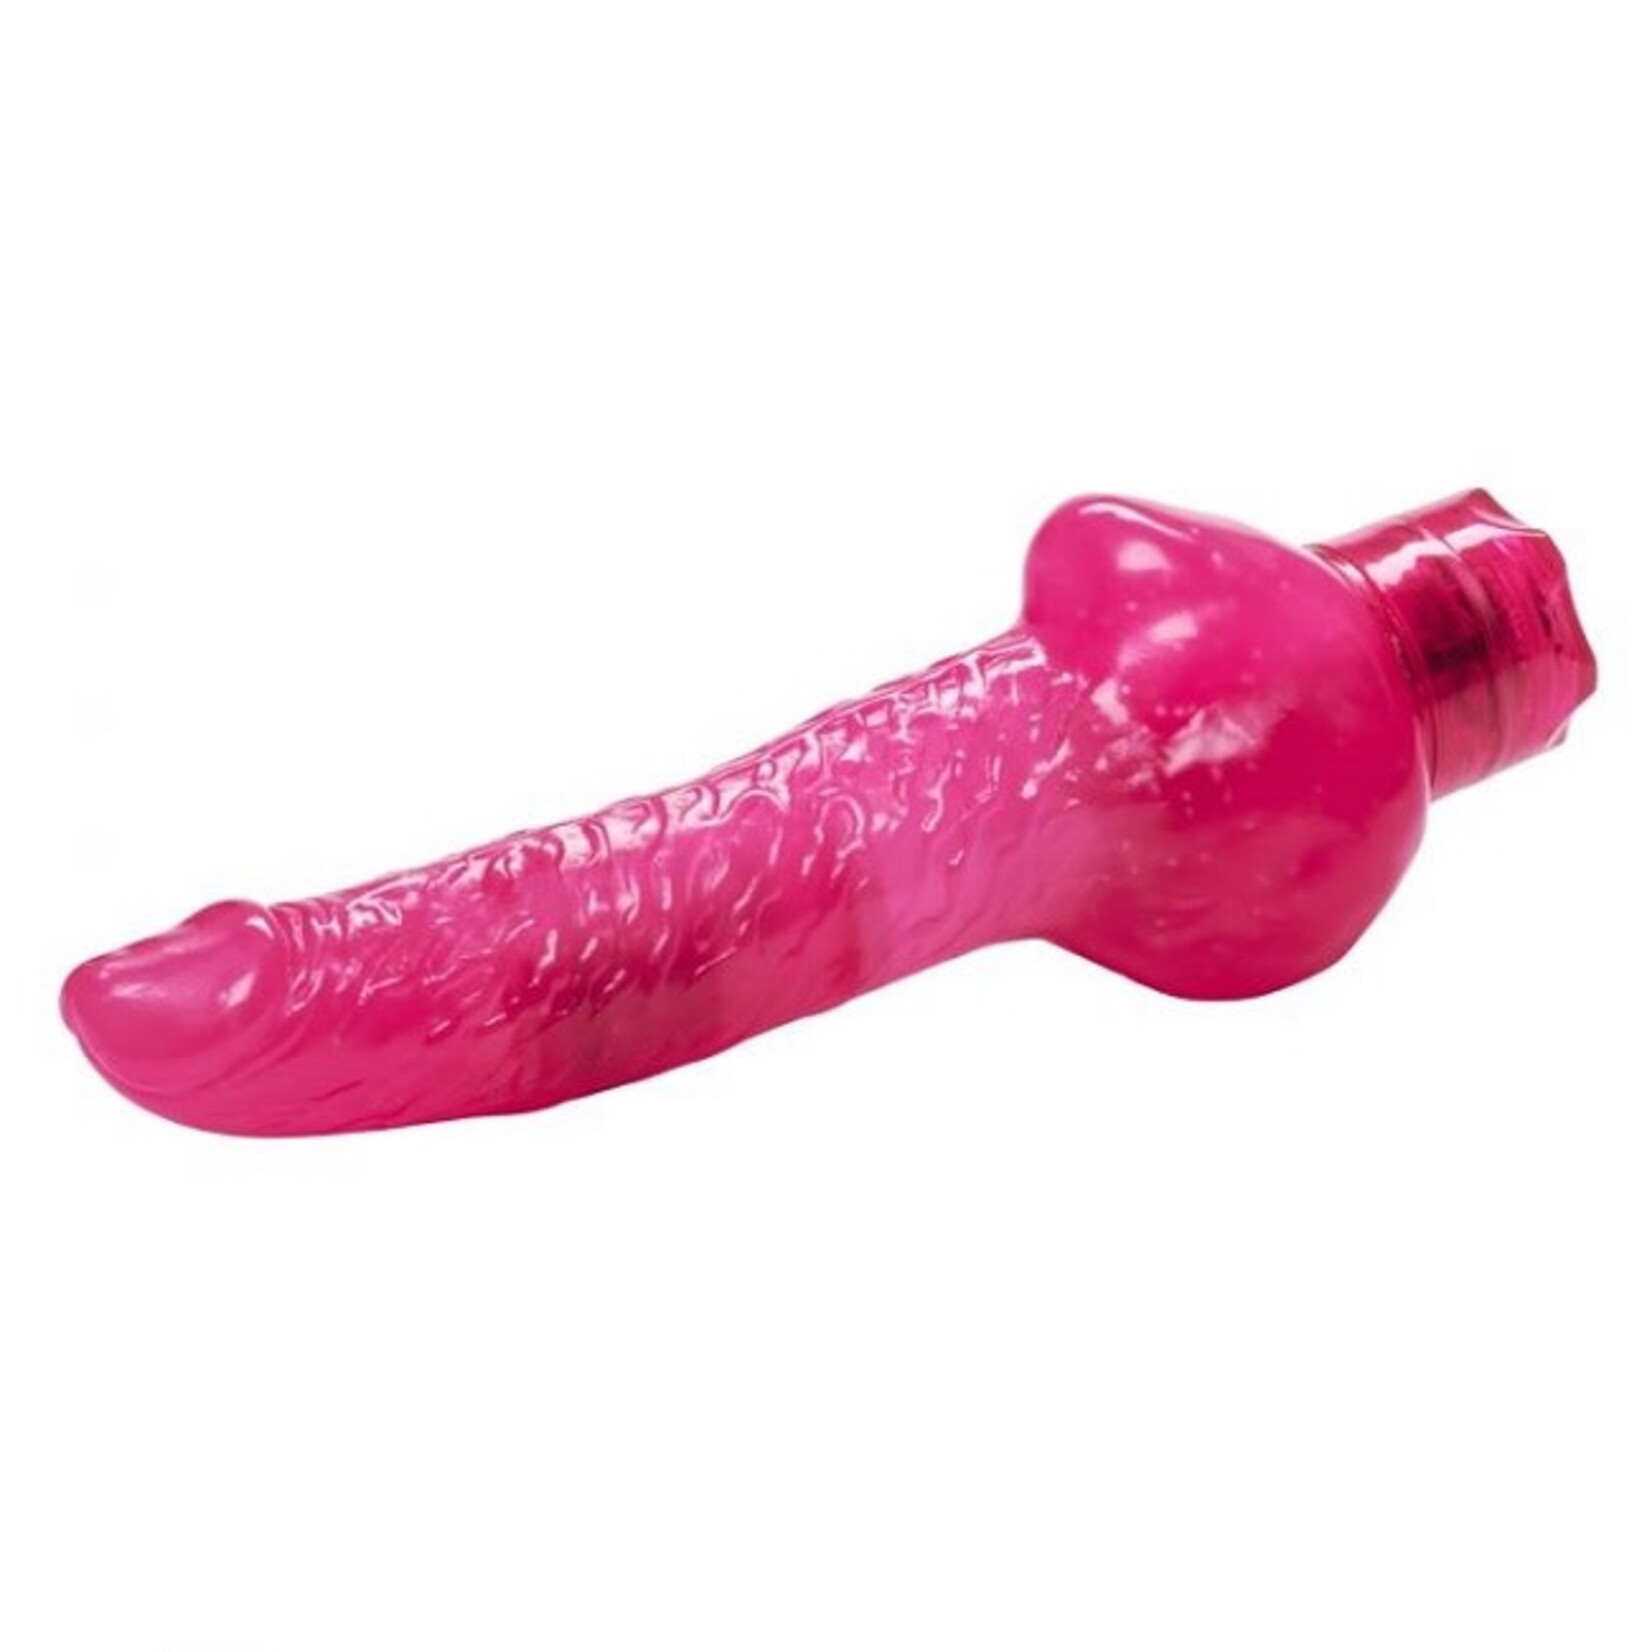 CalExotics Hot Pinks Ballsy Vibrator